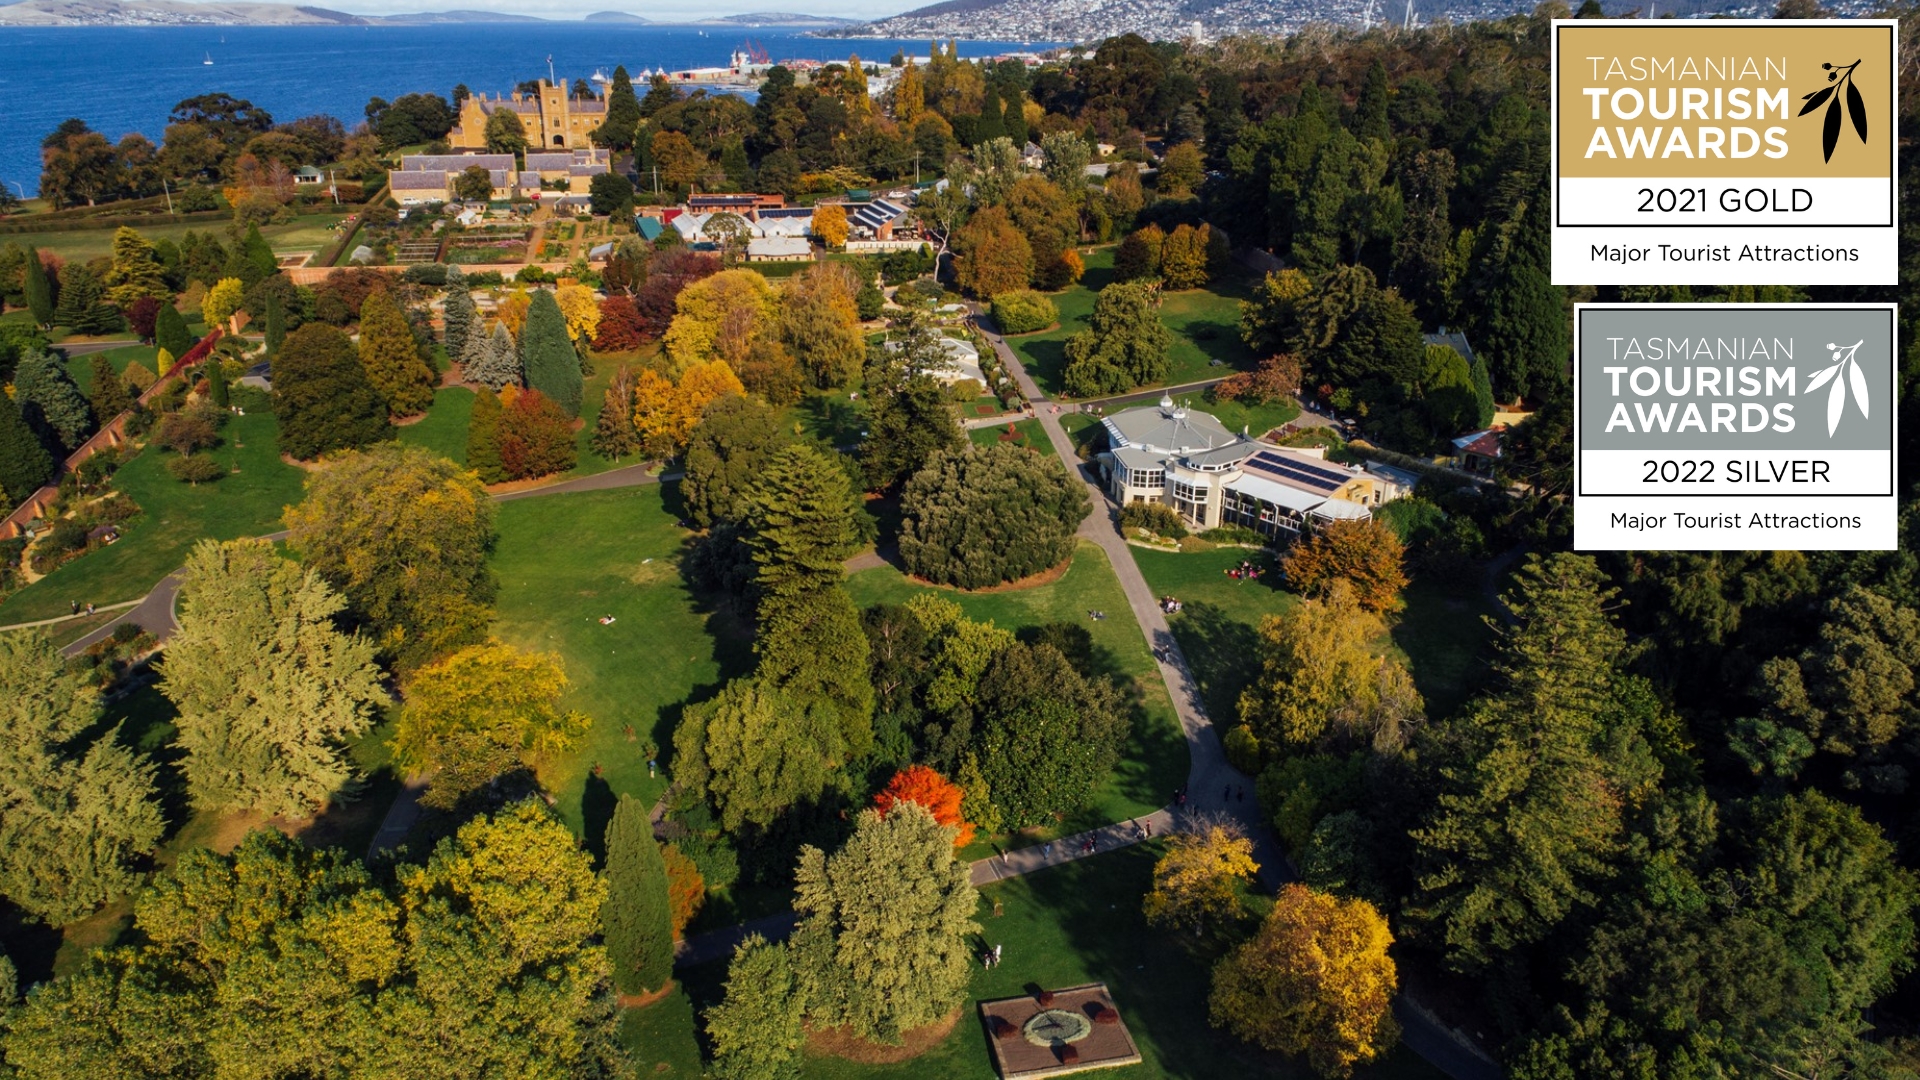 Aerial view of the Royal Tasmanian Botanical Gardens